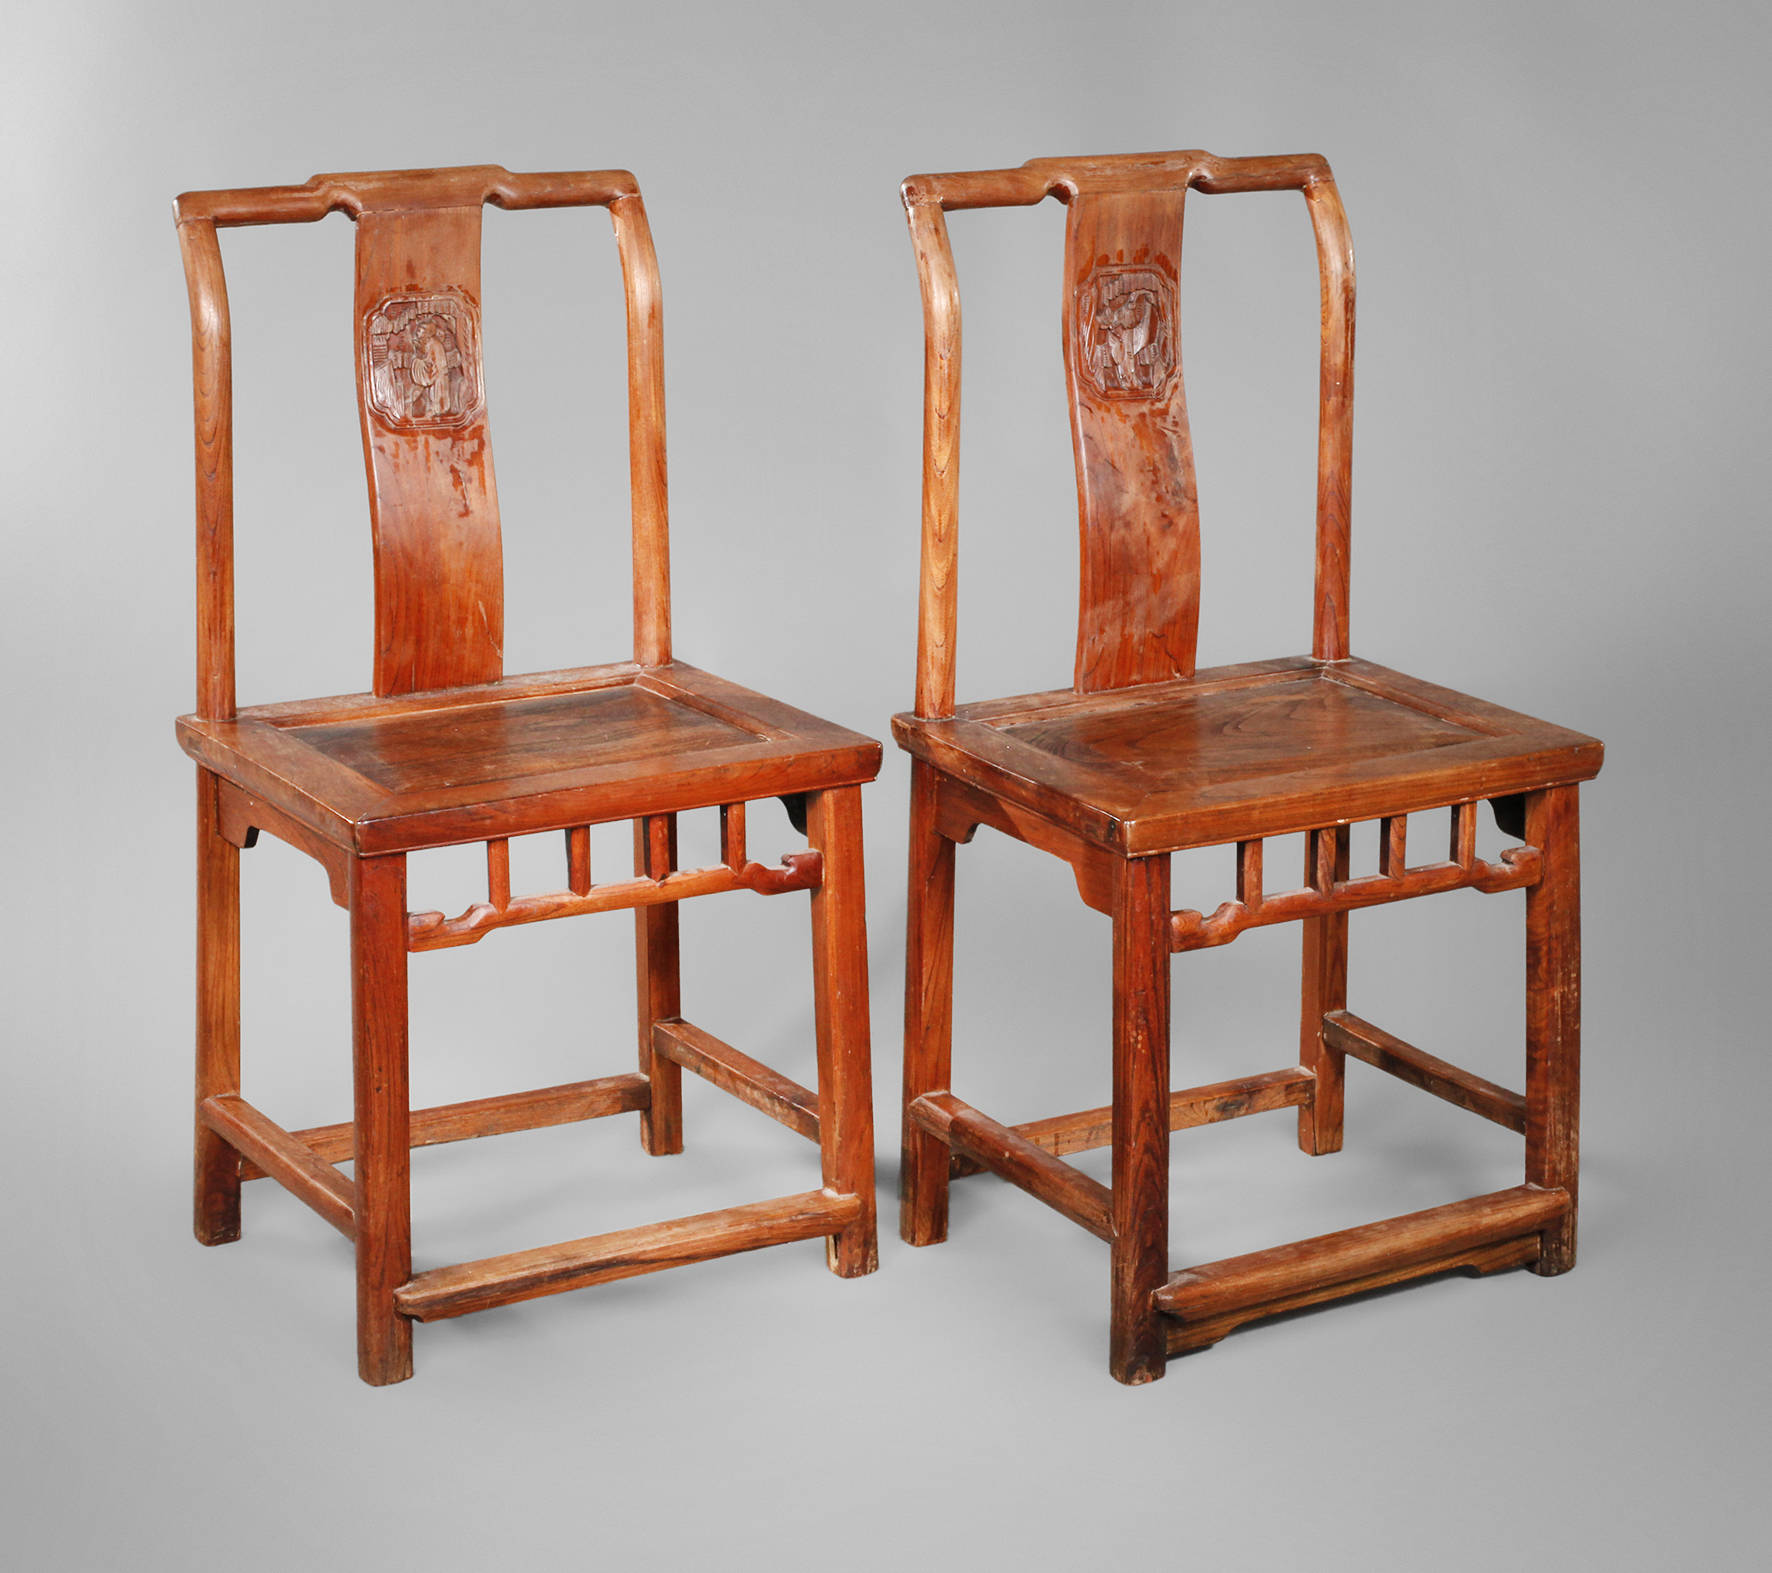 Zwei Stühle China